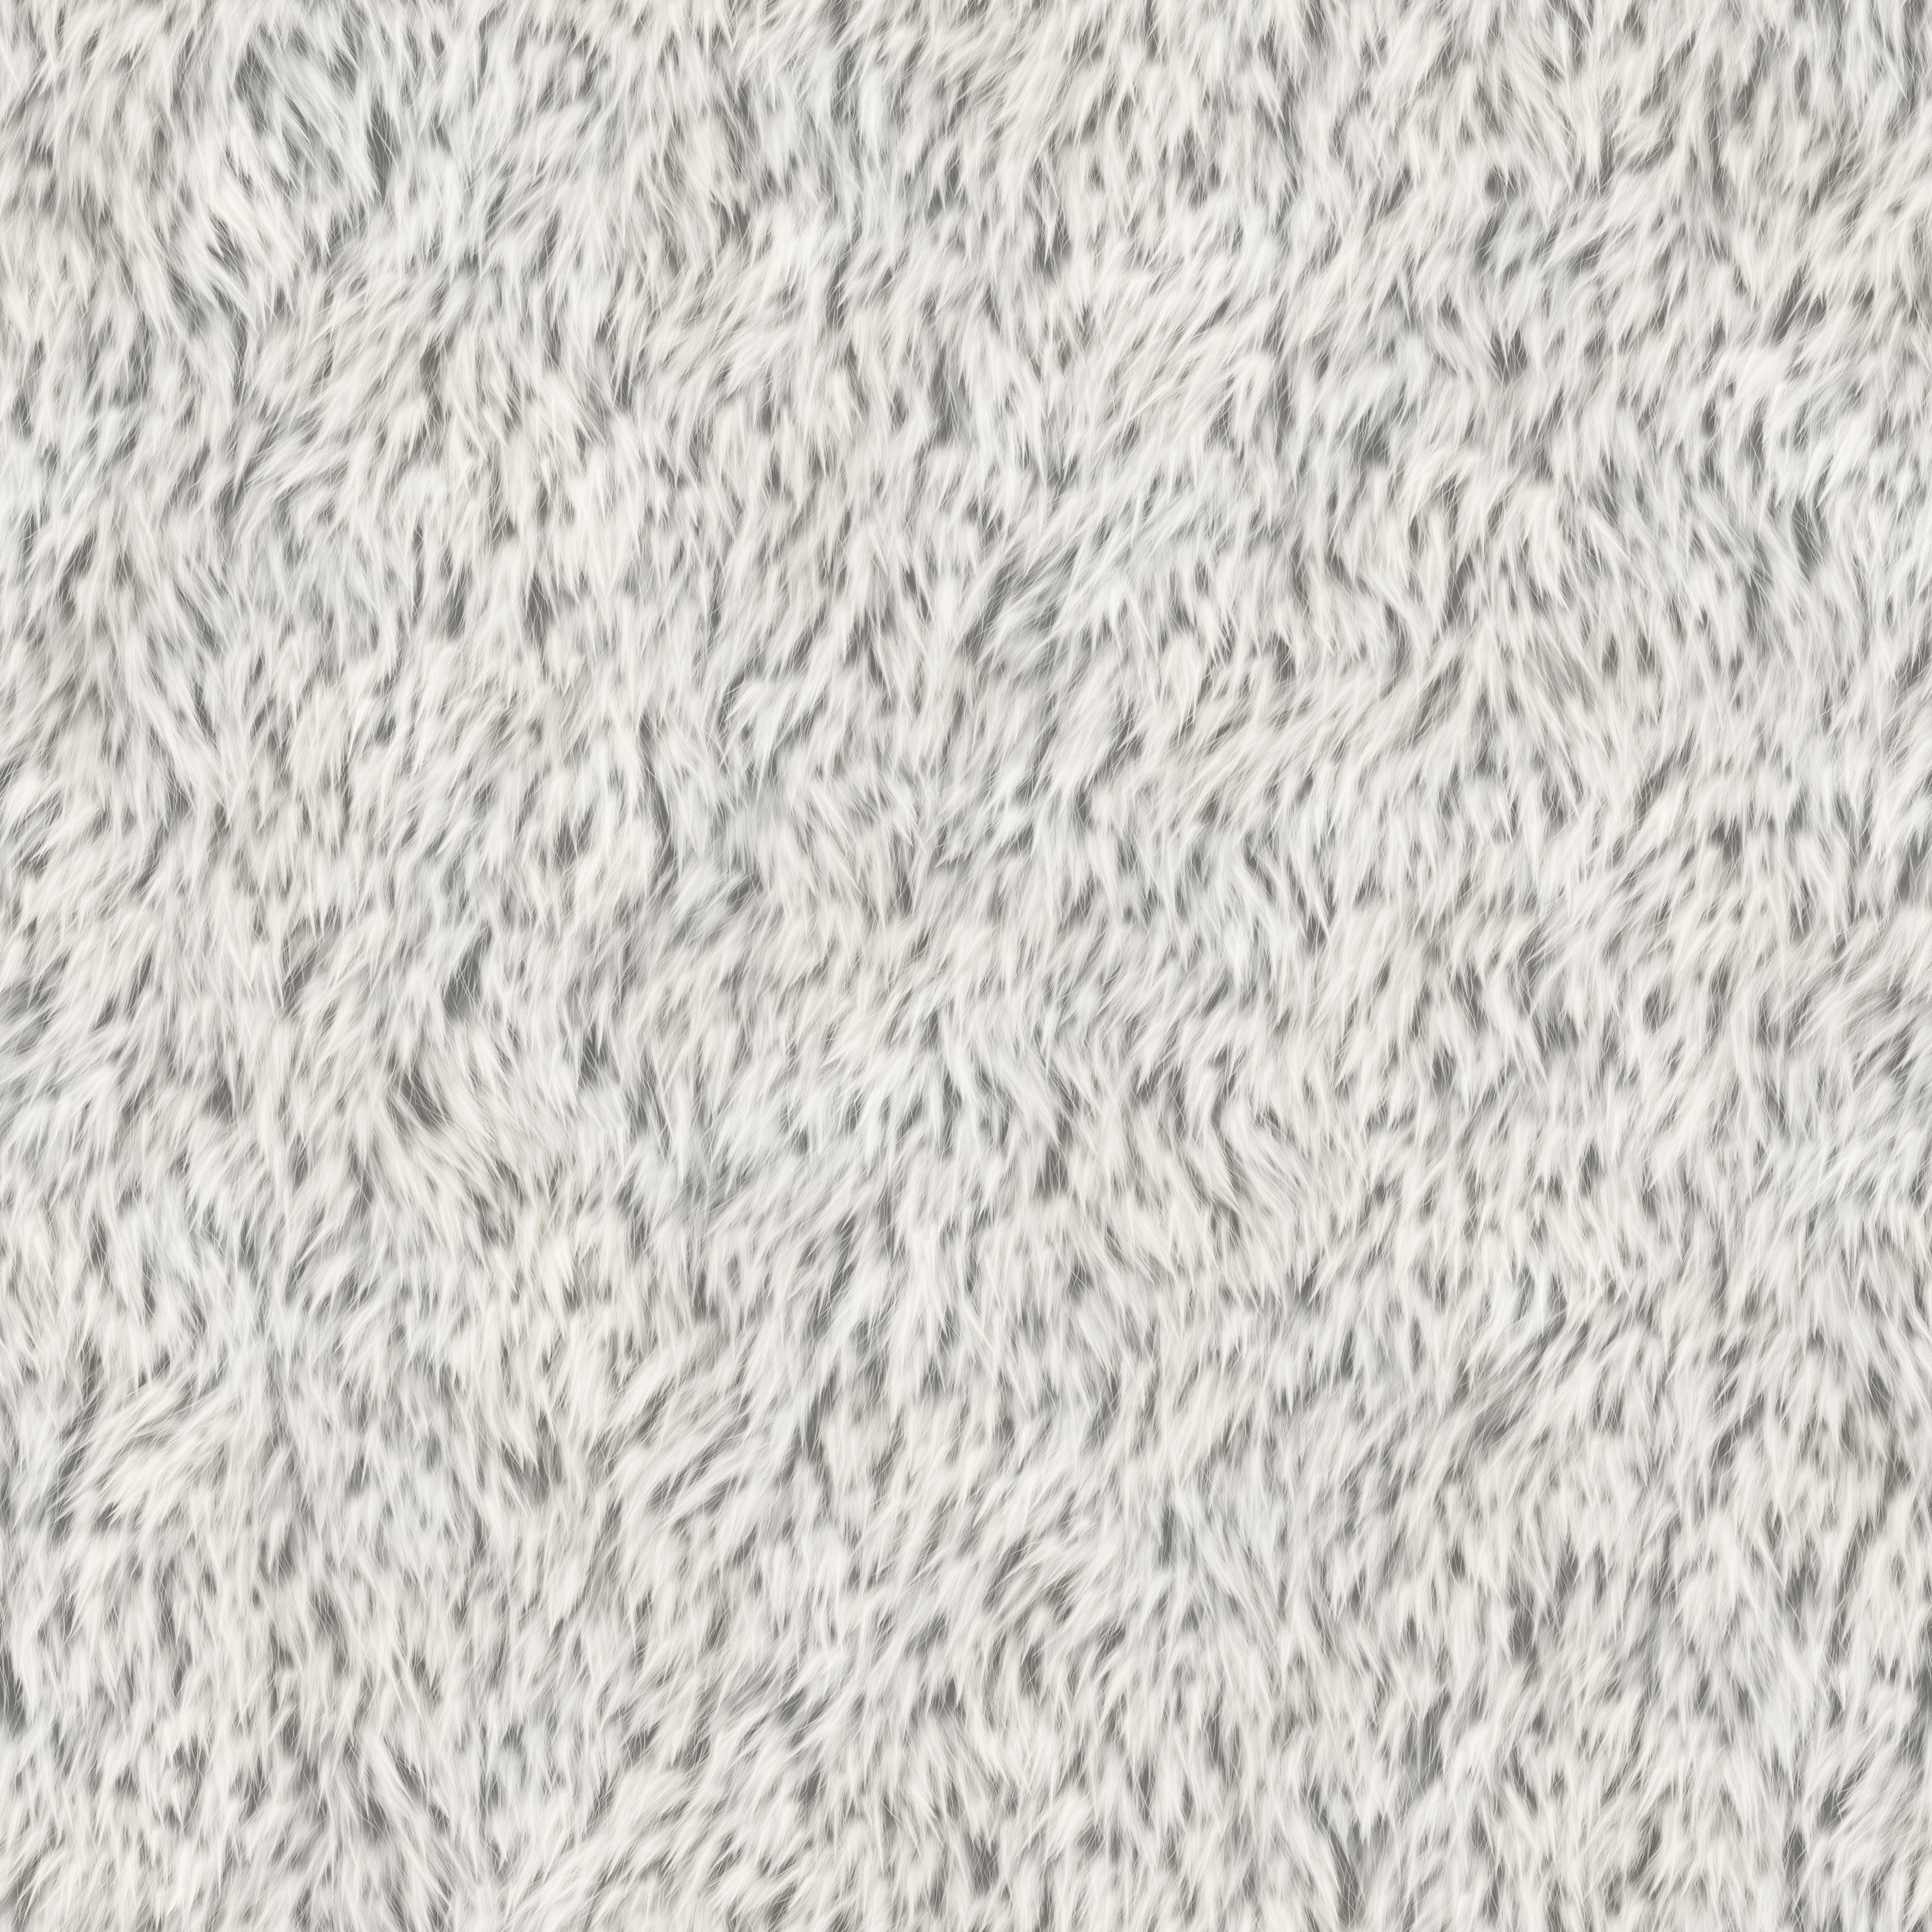 Short White Fur Texture Background. Free